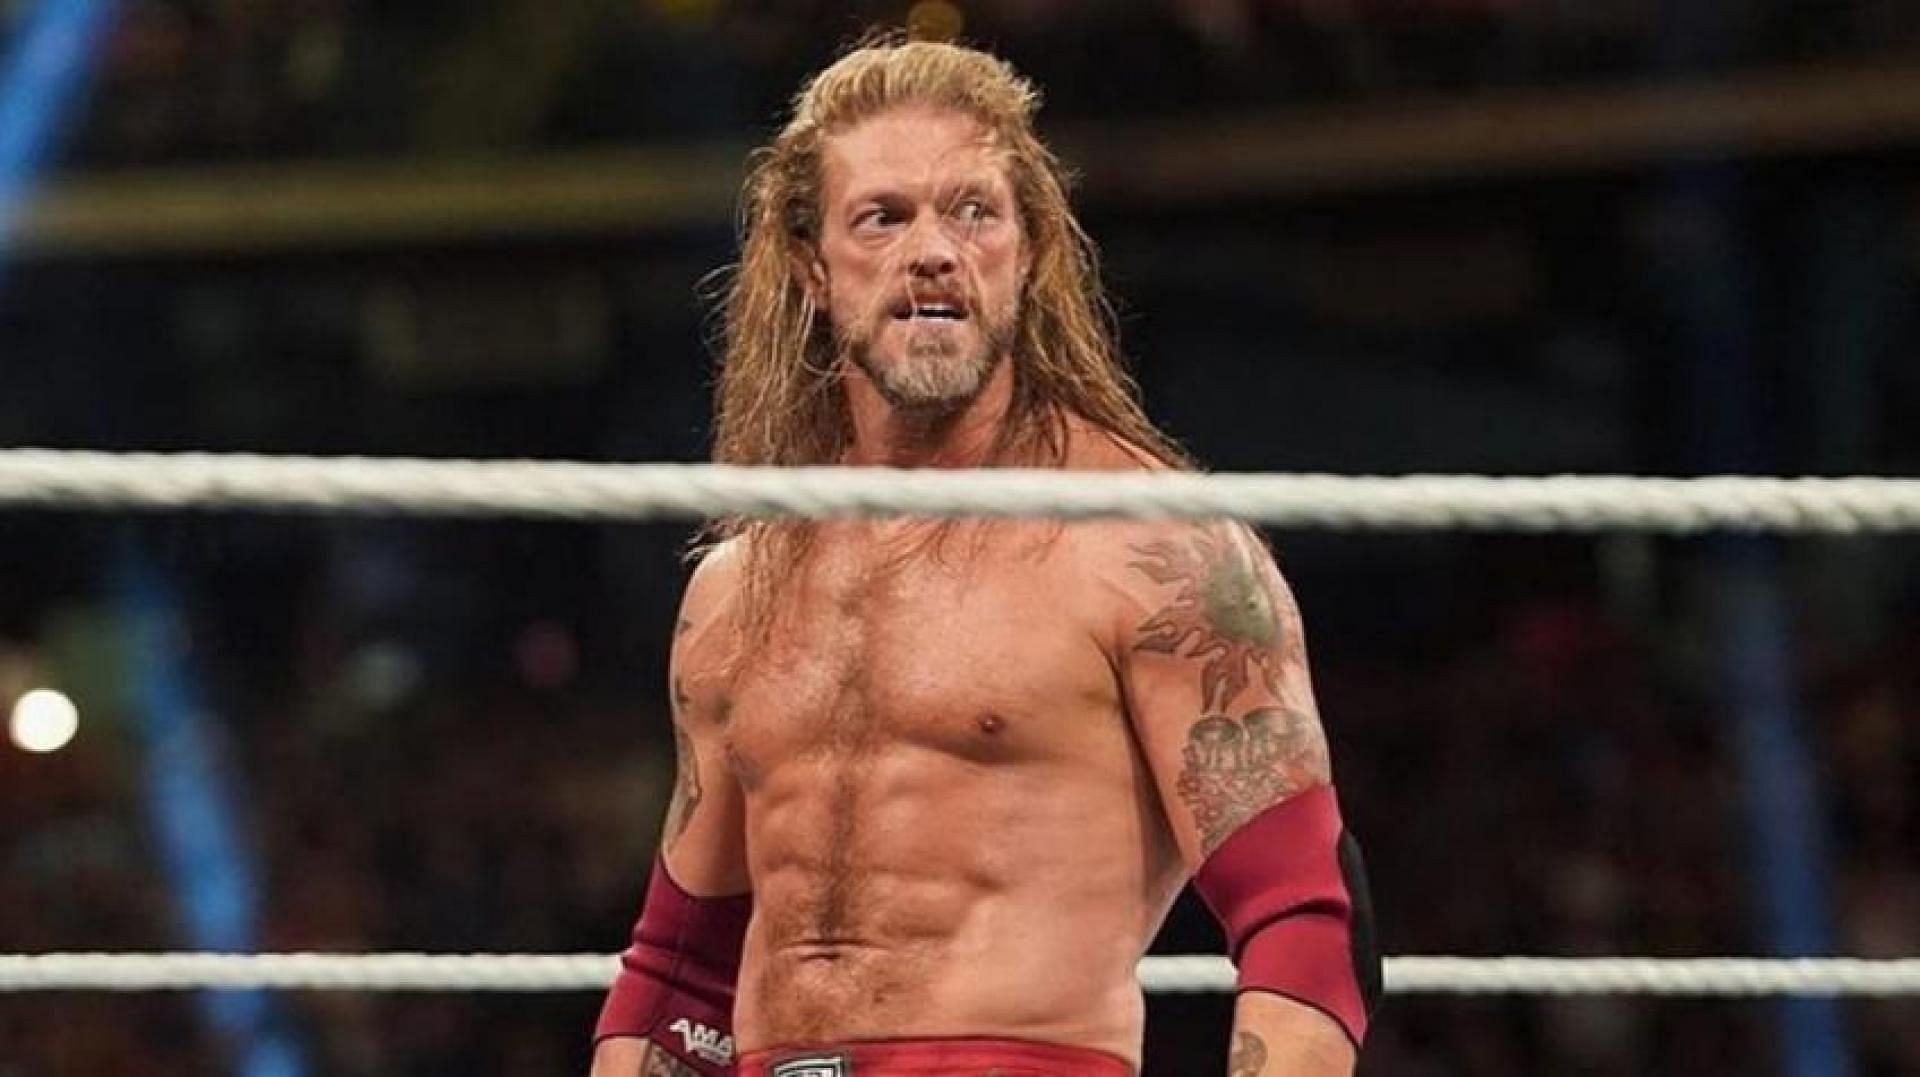 Edge made his WWE return at the 2021 Royal Rumble.